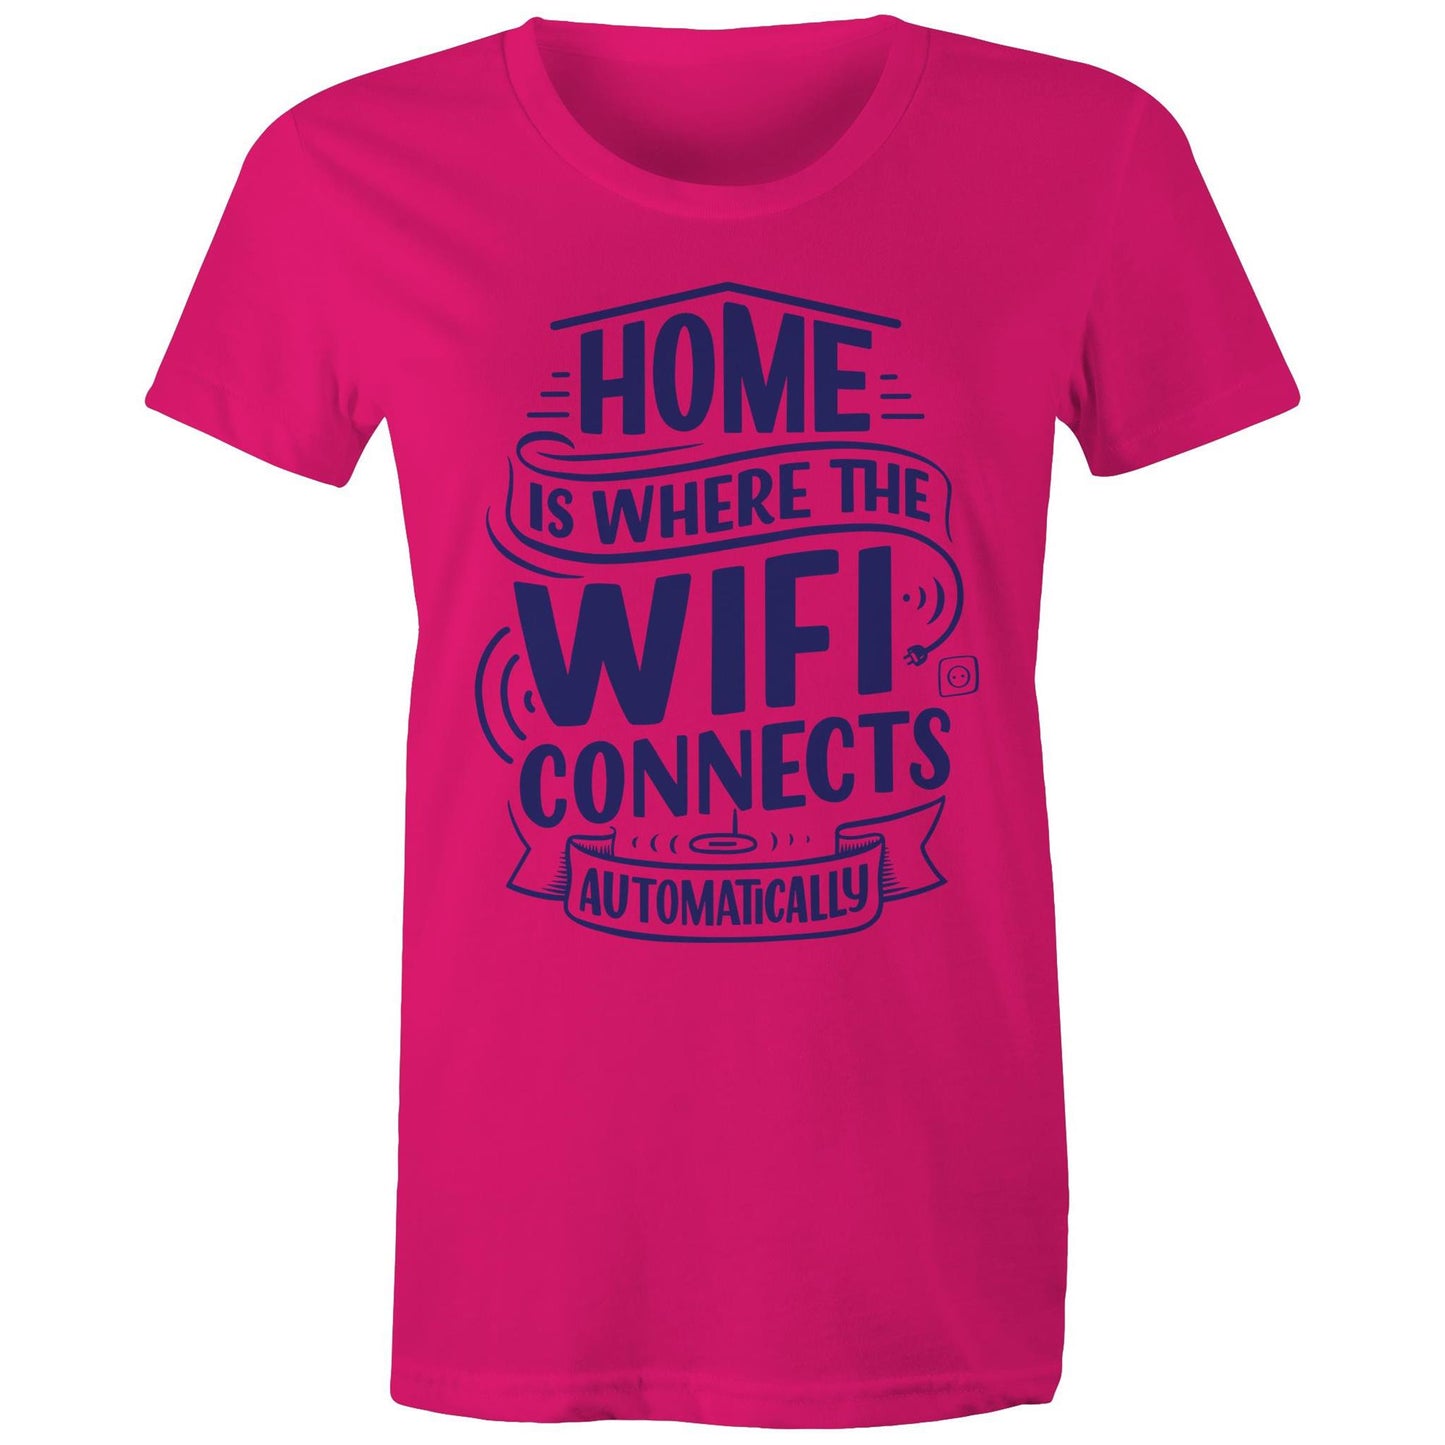 Home Is Where The WIFI Connects Automatically - Womens T-shirt Fuchsia Womens T-shirt Tech